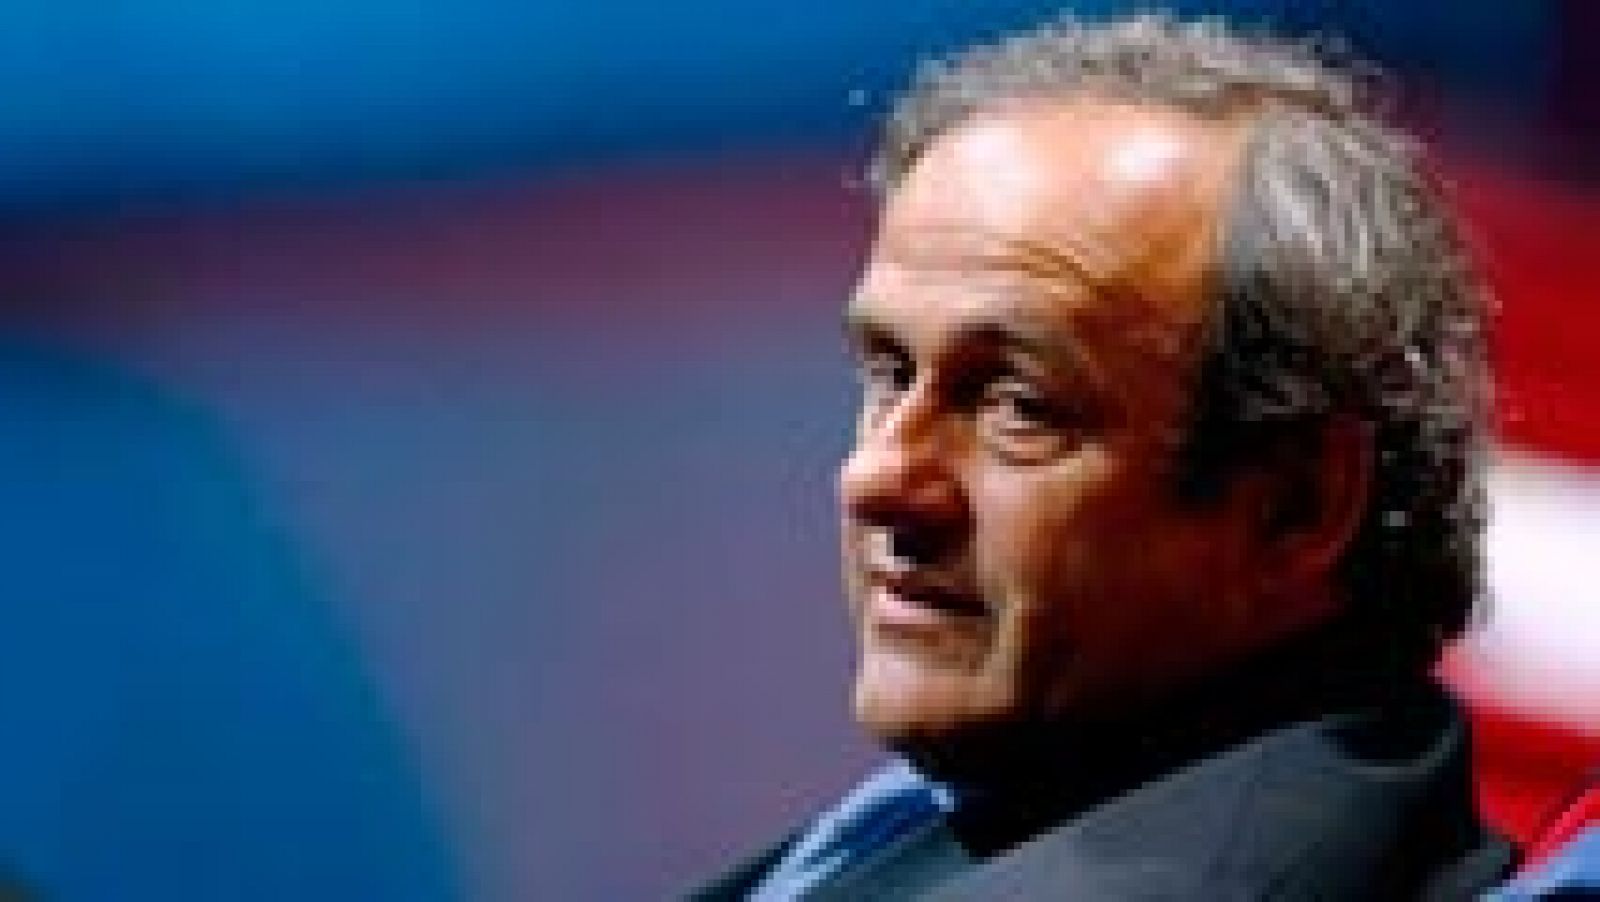 Telediario 1: Platini: "Encuentro vergonzoso que se me arrastre por el barro" | RTVE Play